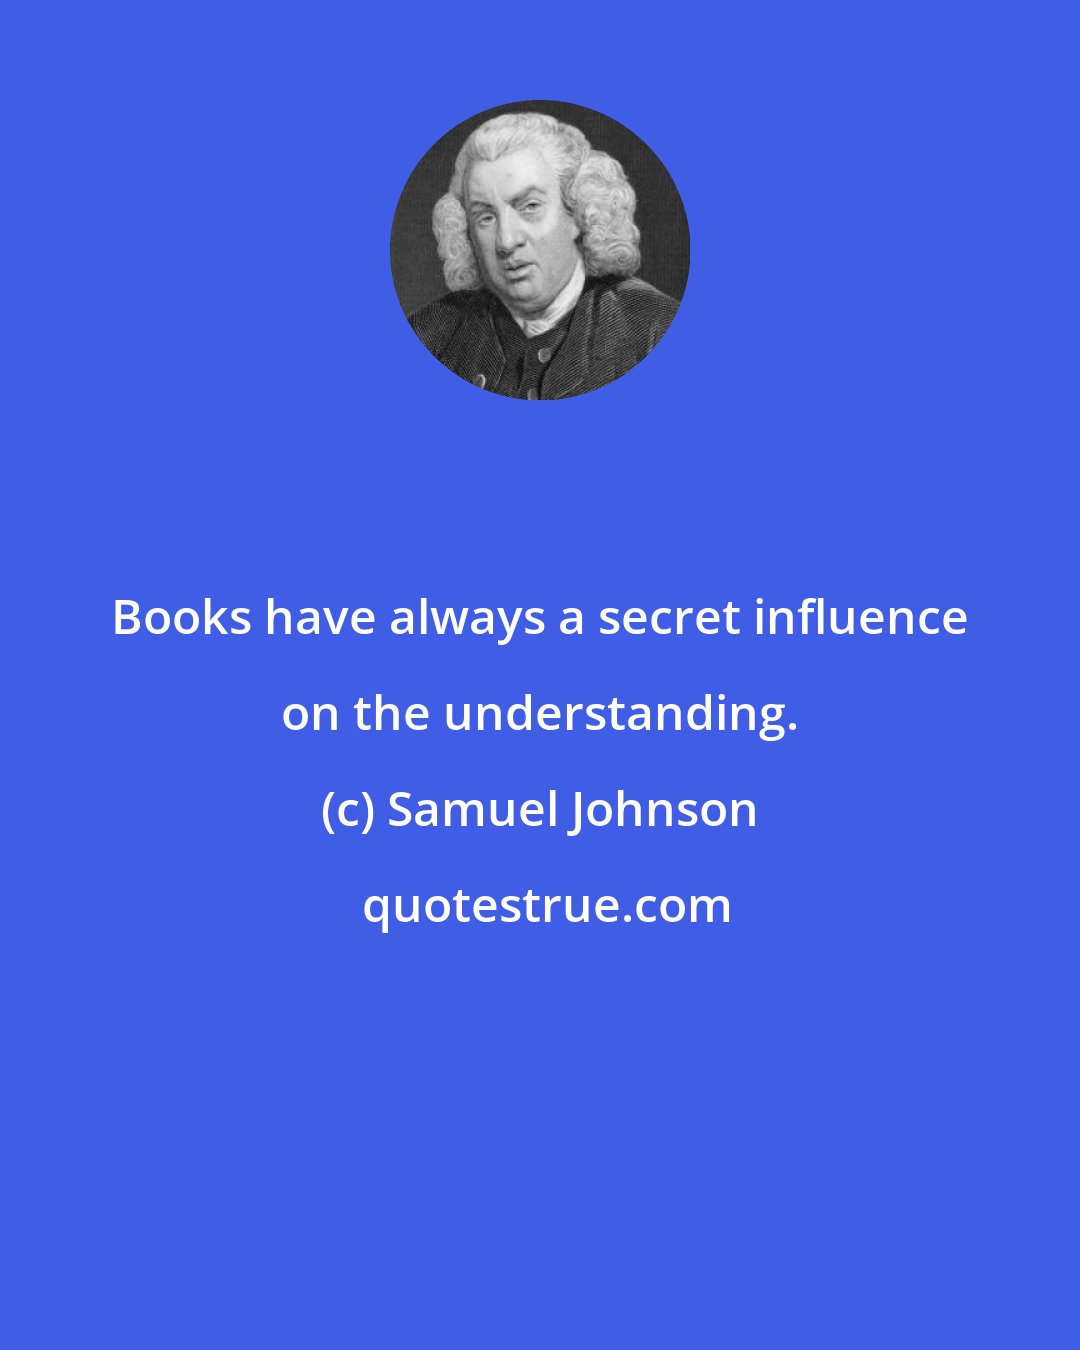 Samuel Johnson: Books have always a secret influence on the understanding.